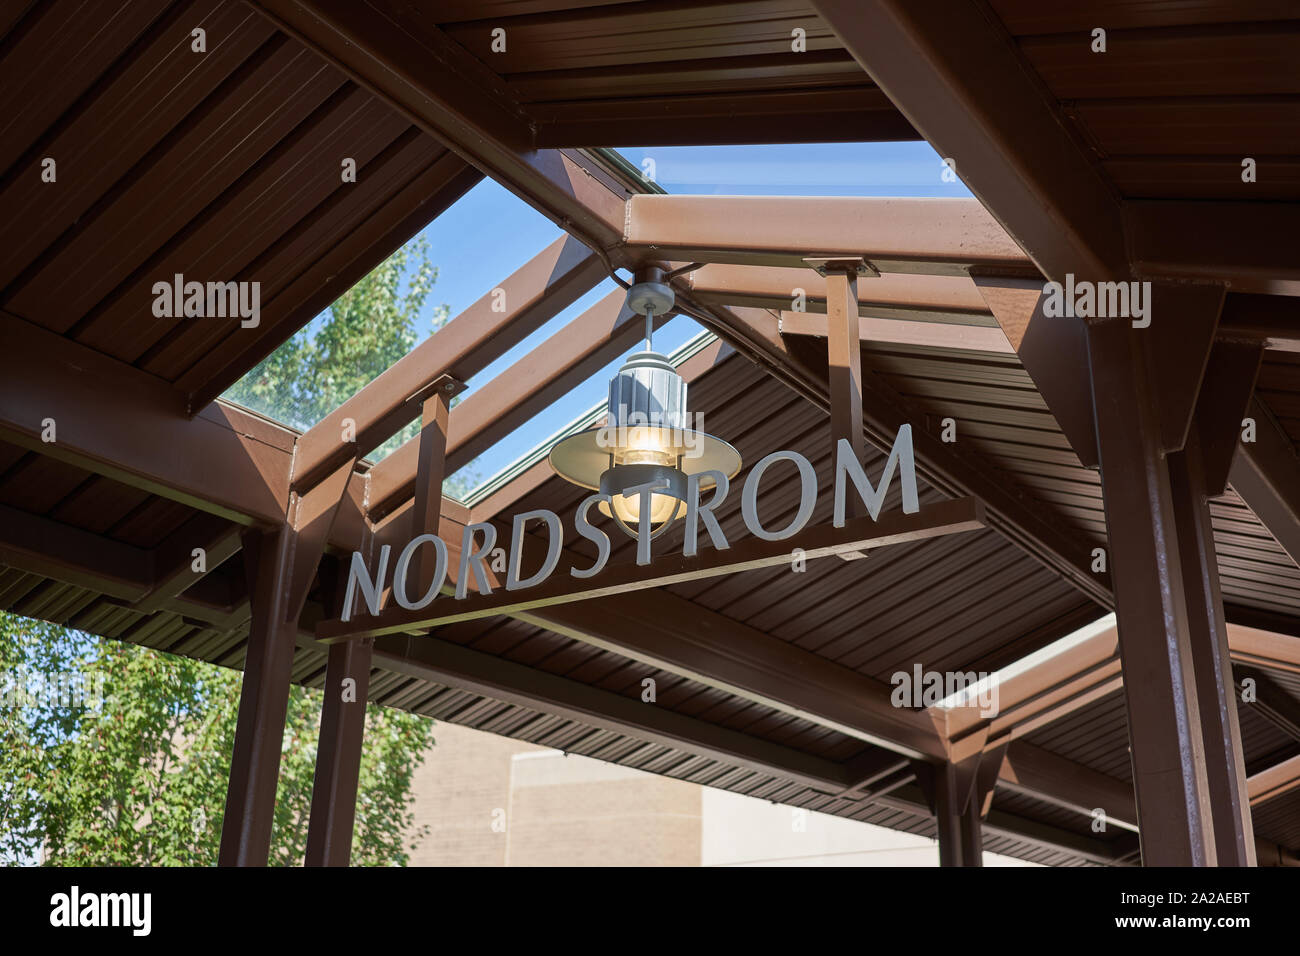 Tigard, Oregon, USA - Sep 16, 2019 : le signe Nordstrom est considéré à l'entrée d'un grand magasin Nordstrom à Tigard, Oregon. Banque D'Images